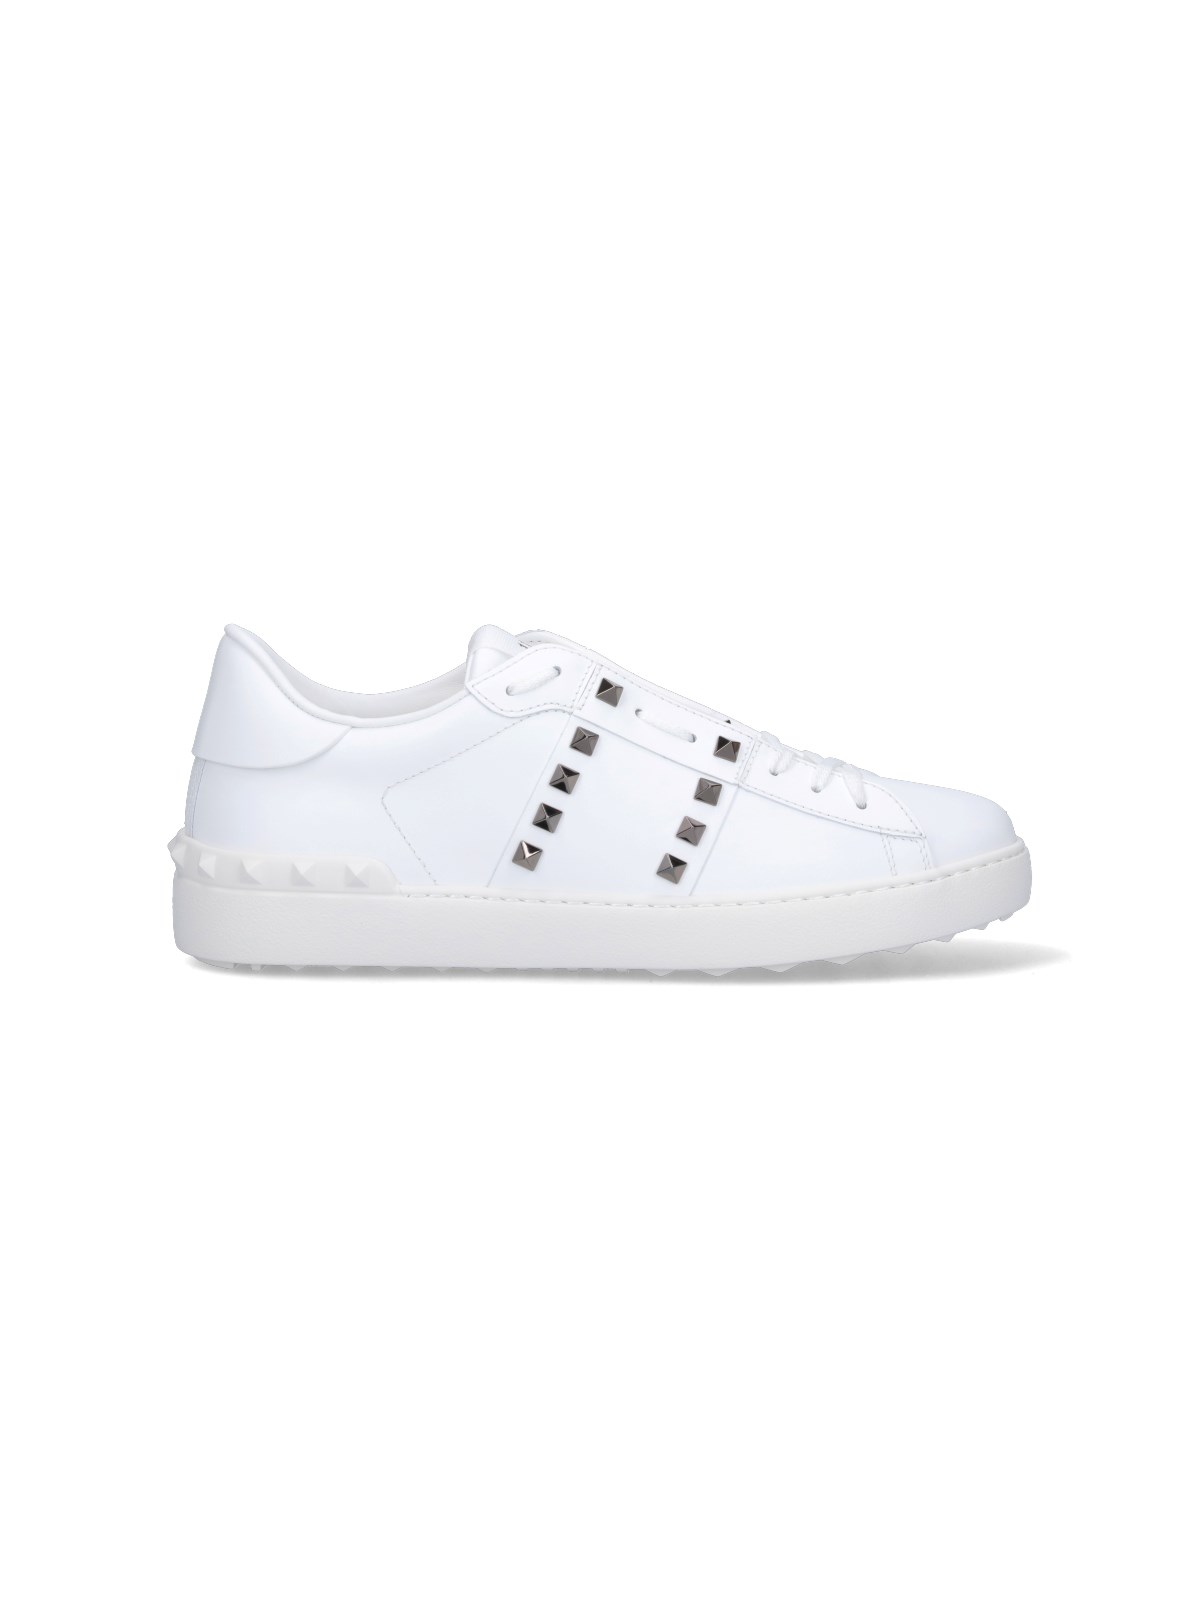 Valentino Garavani "rockstud" Sneakers In White